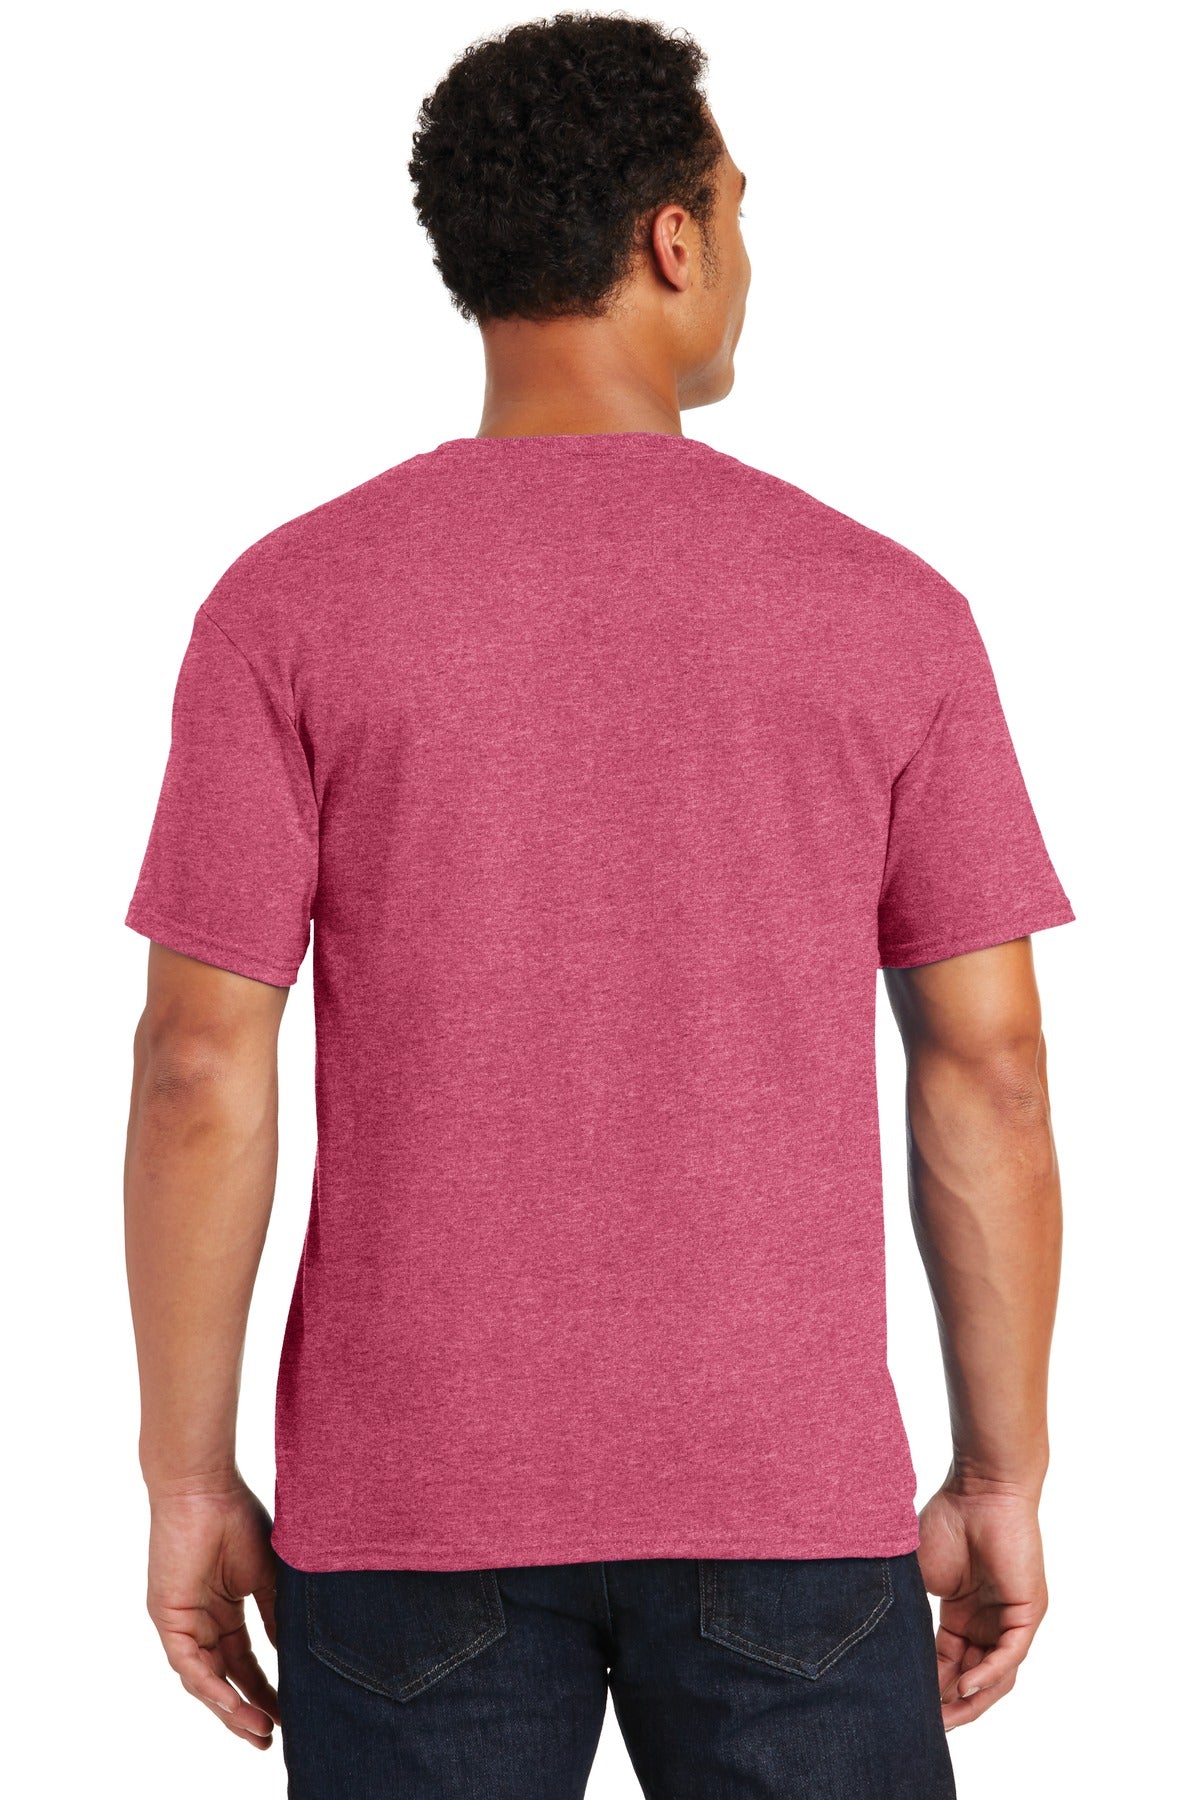 Jerzees - Dri-Power 50/50 Cotton/Poly T-Shirt. 29M - Vintage Heather Red